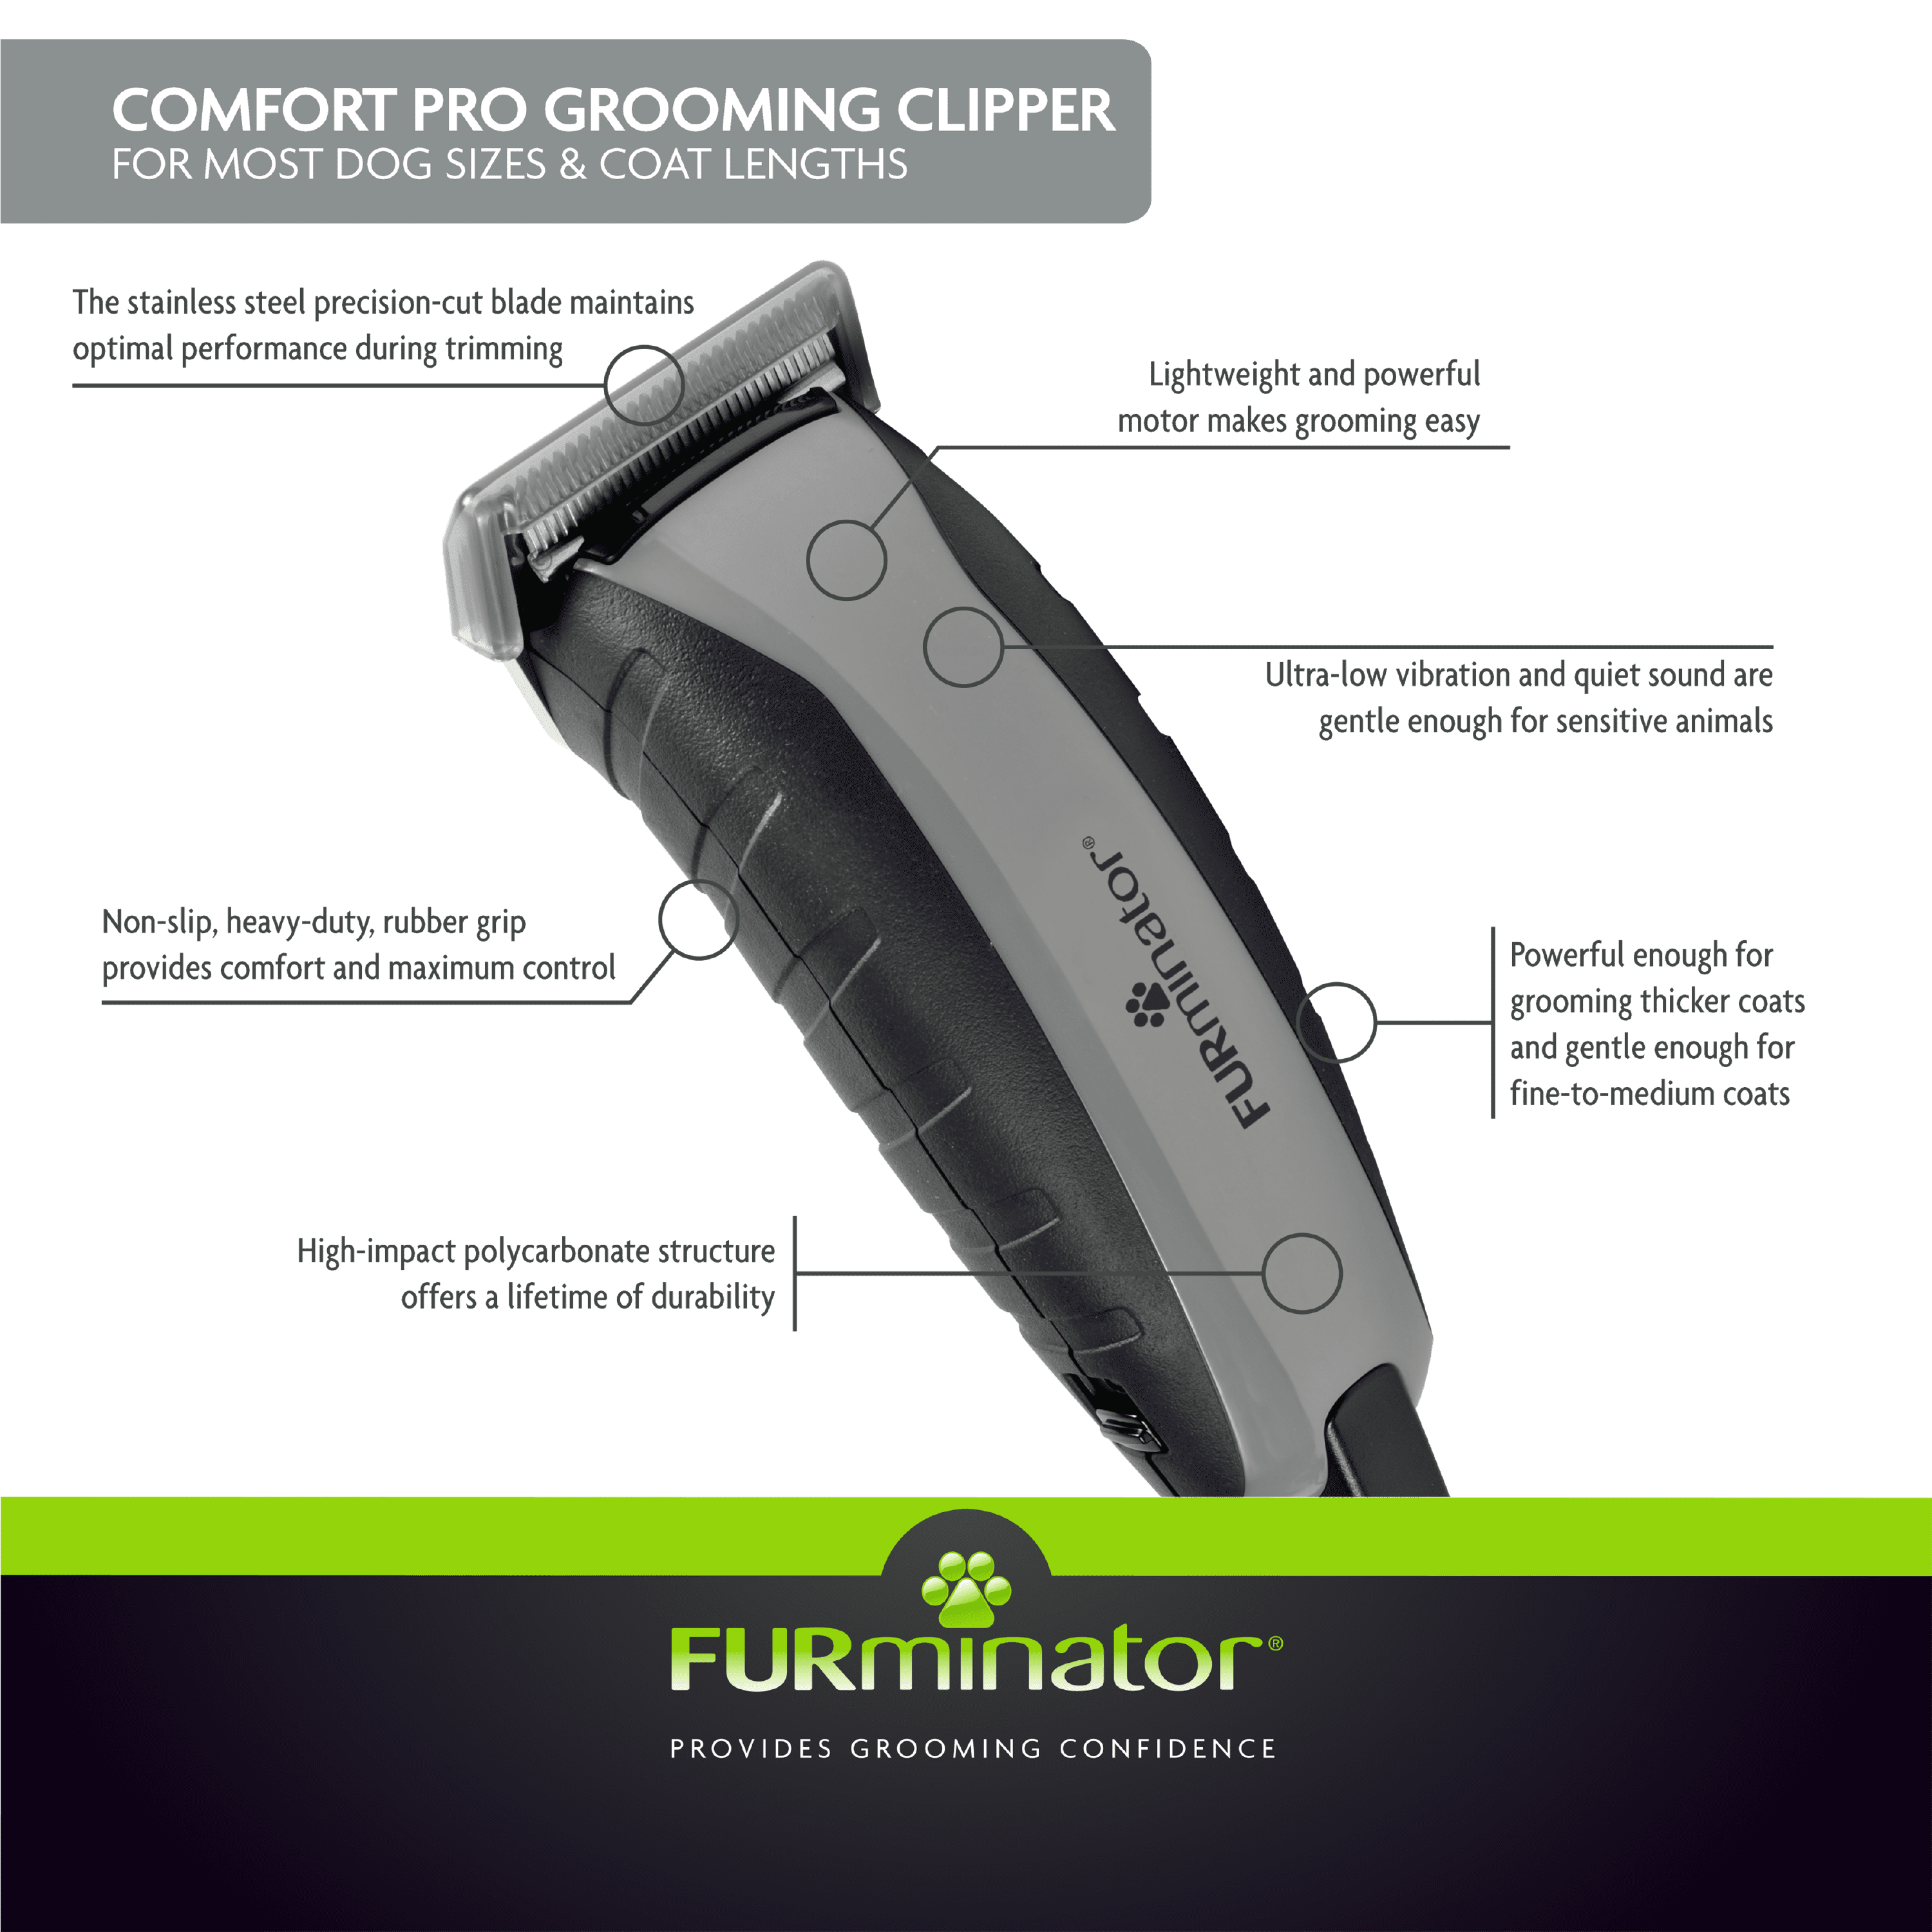 furminator comfort pro grooming clipper review